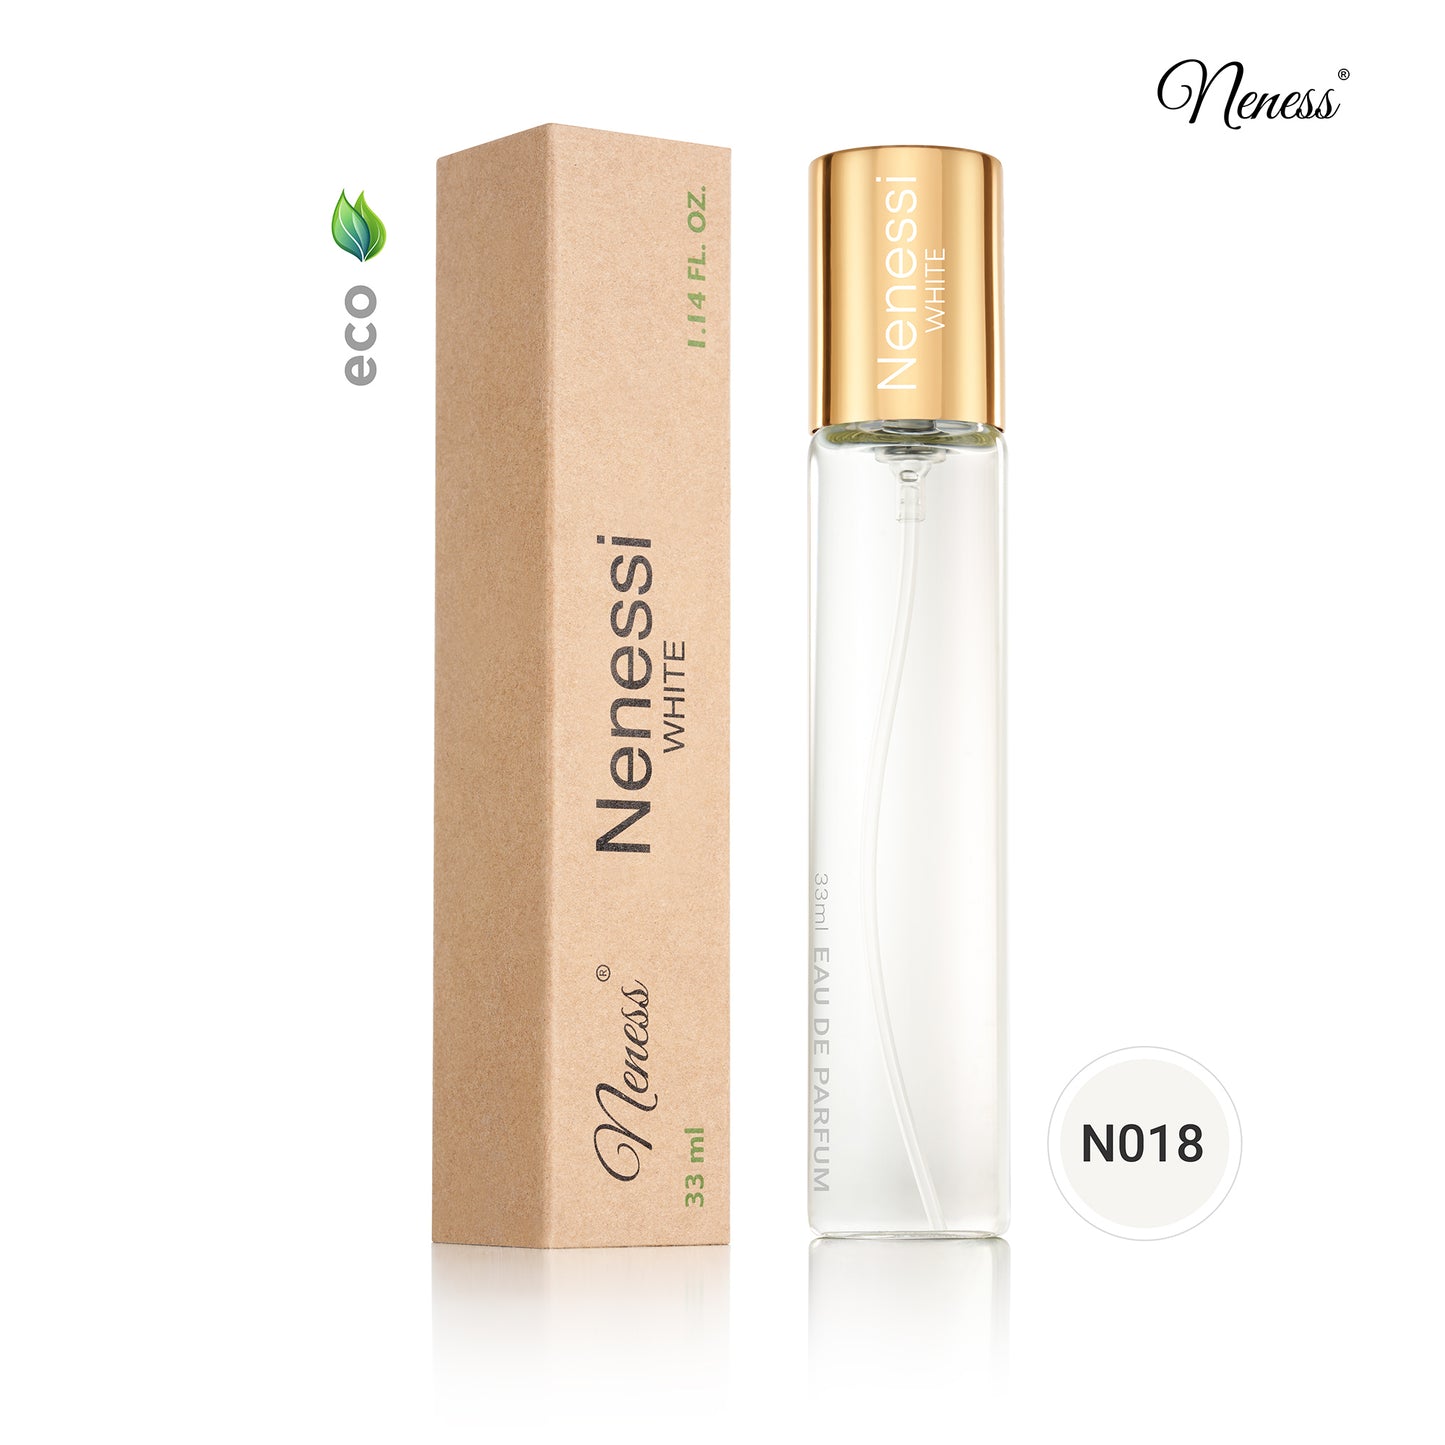 N018. Nenessi White - 33 ml - Perfume For Women